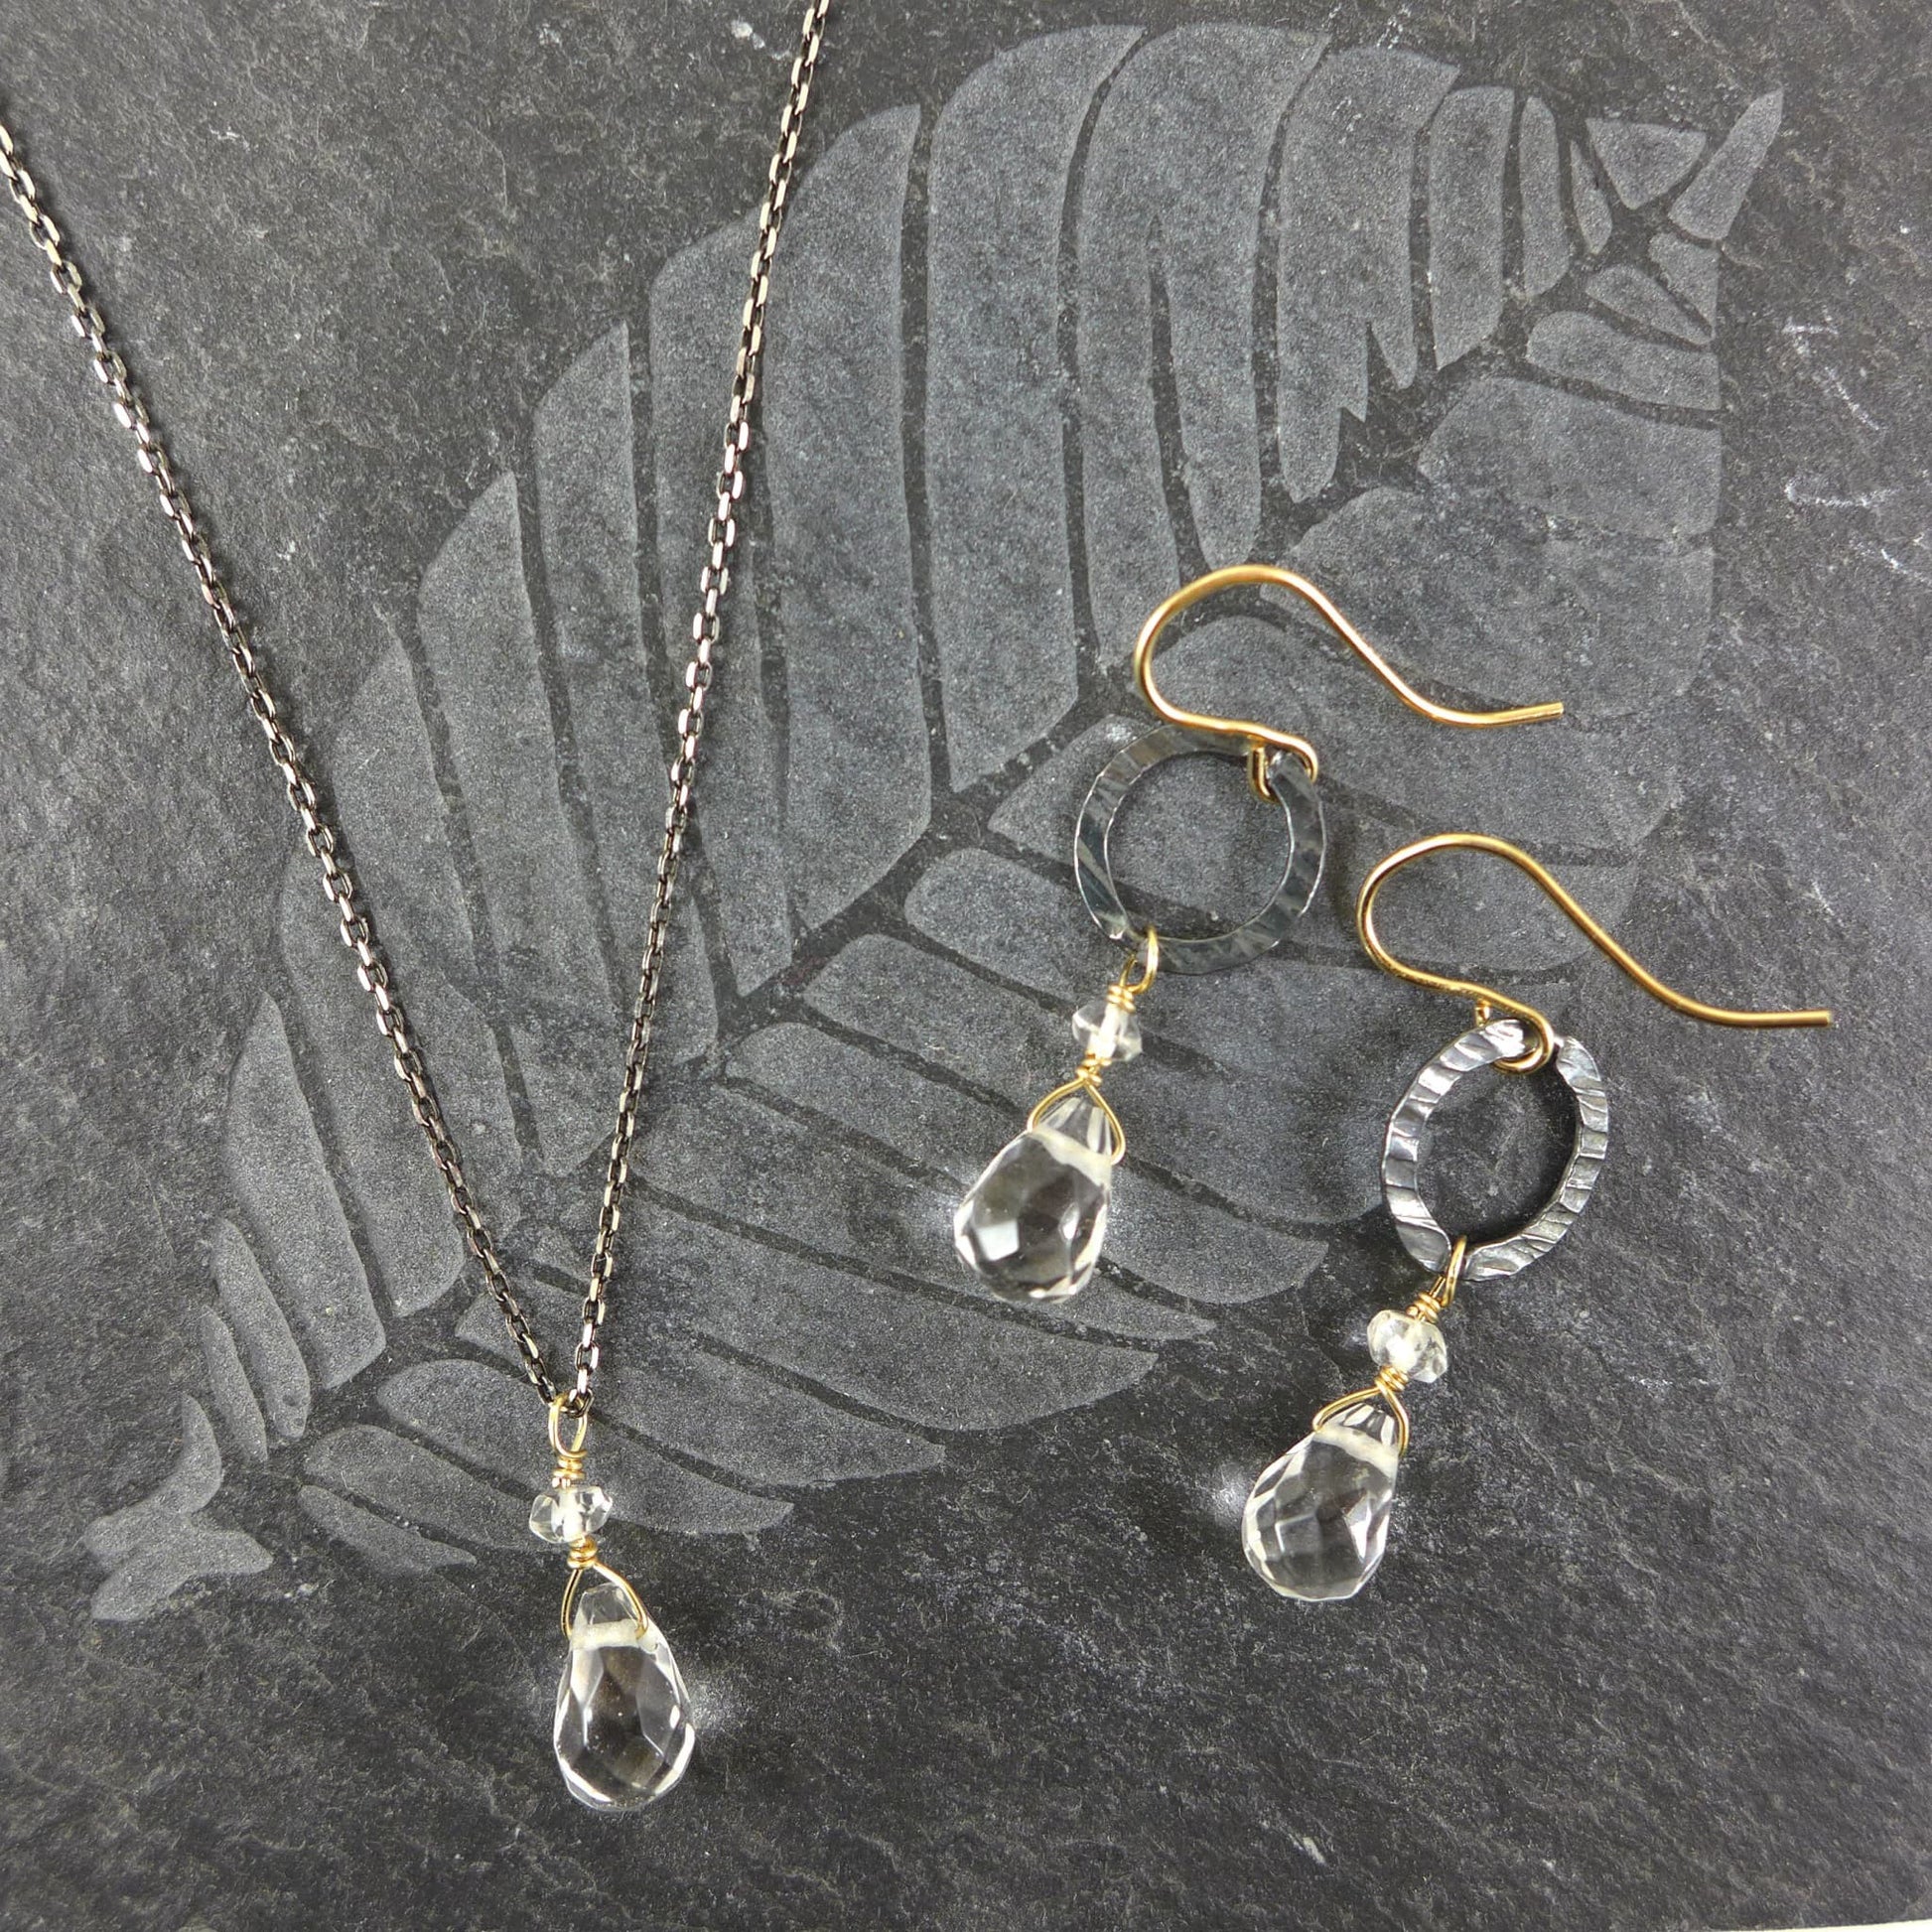 Rock Crystal Earrings - karen-morrison-jewellery